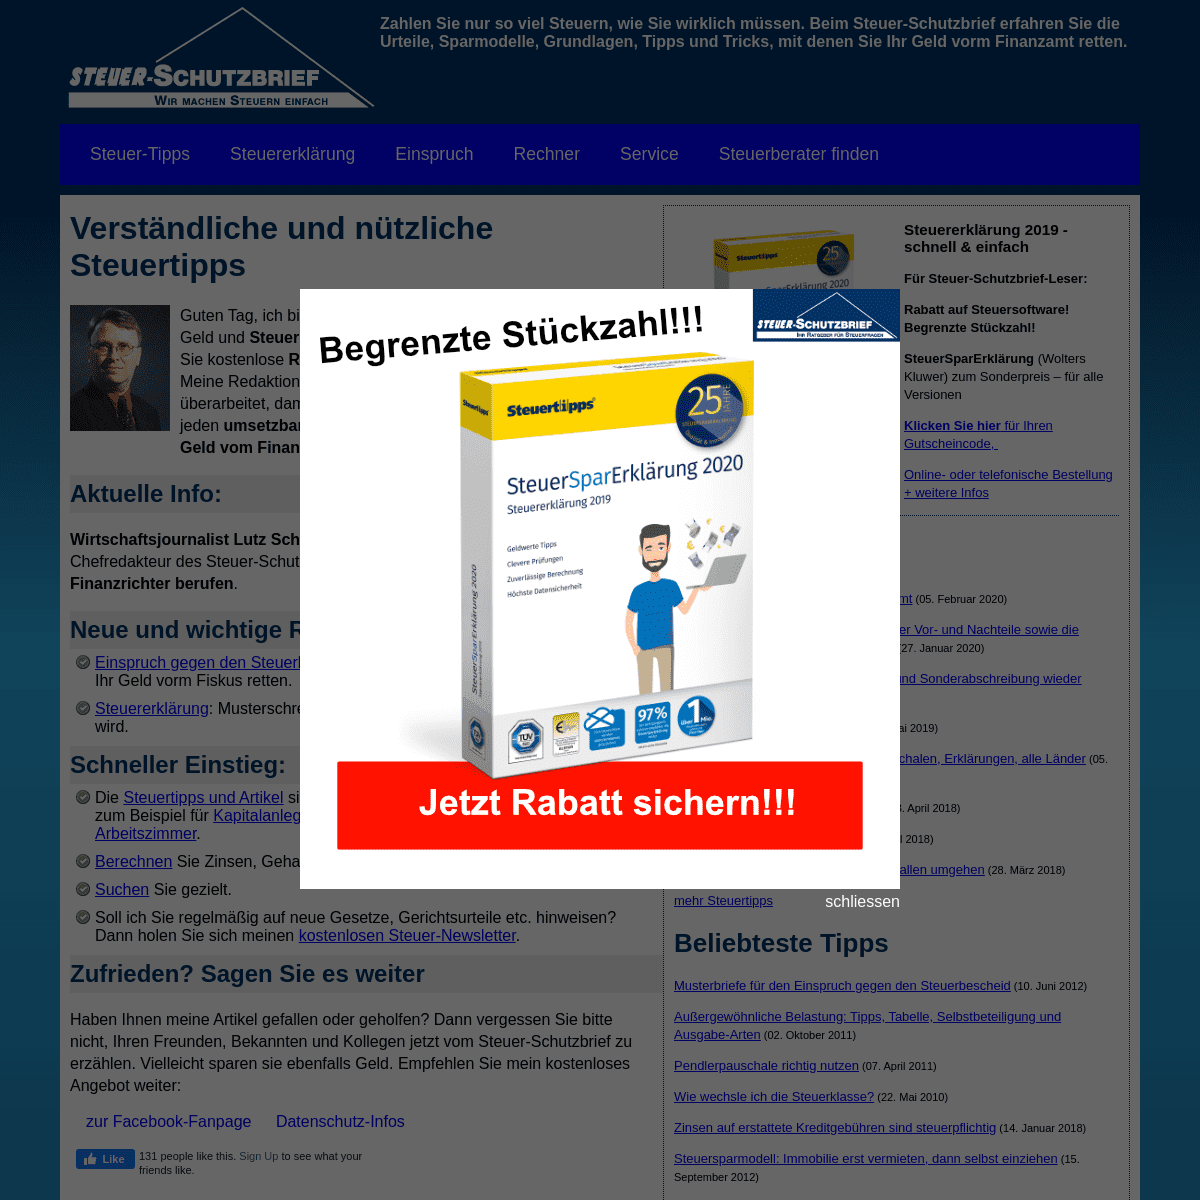 A complete backup of steuer-schutzbrief.de